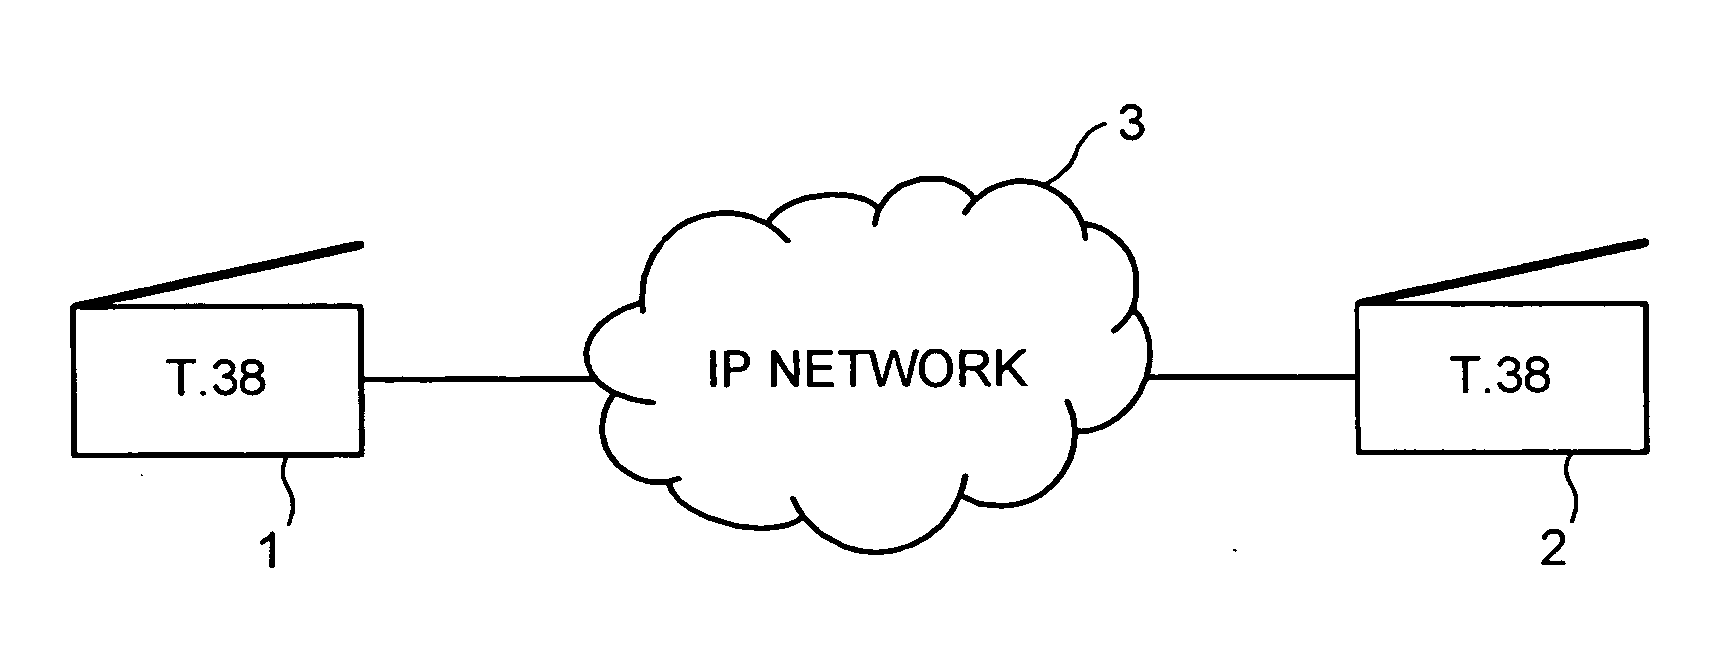 Network facsimile apparatus